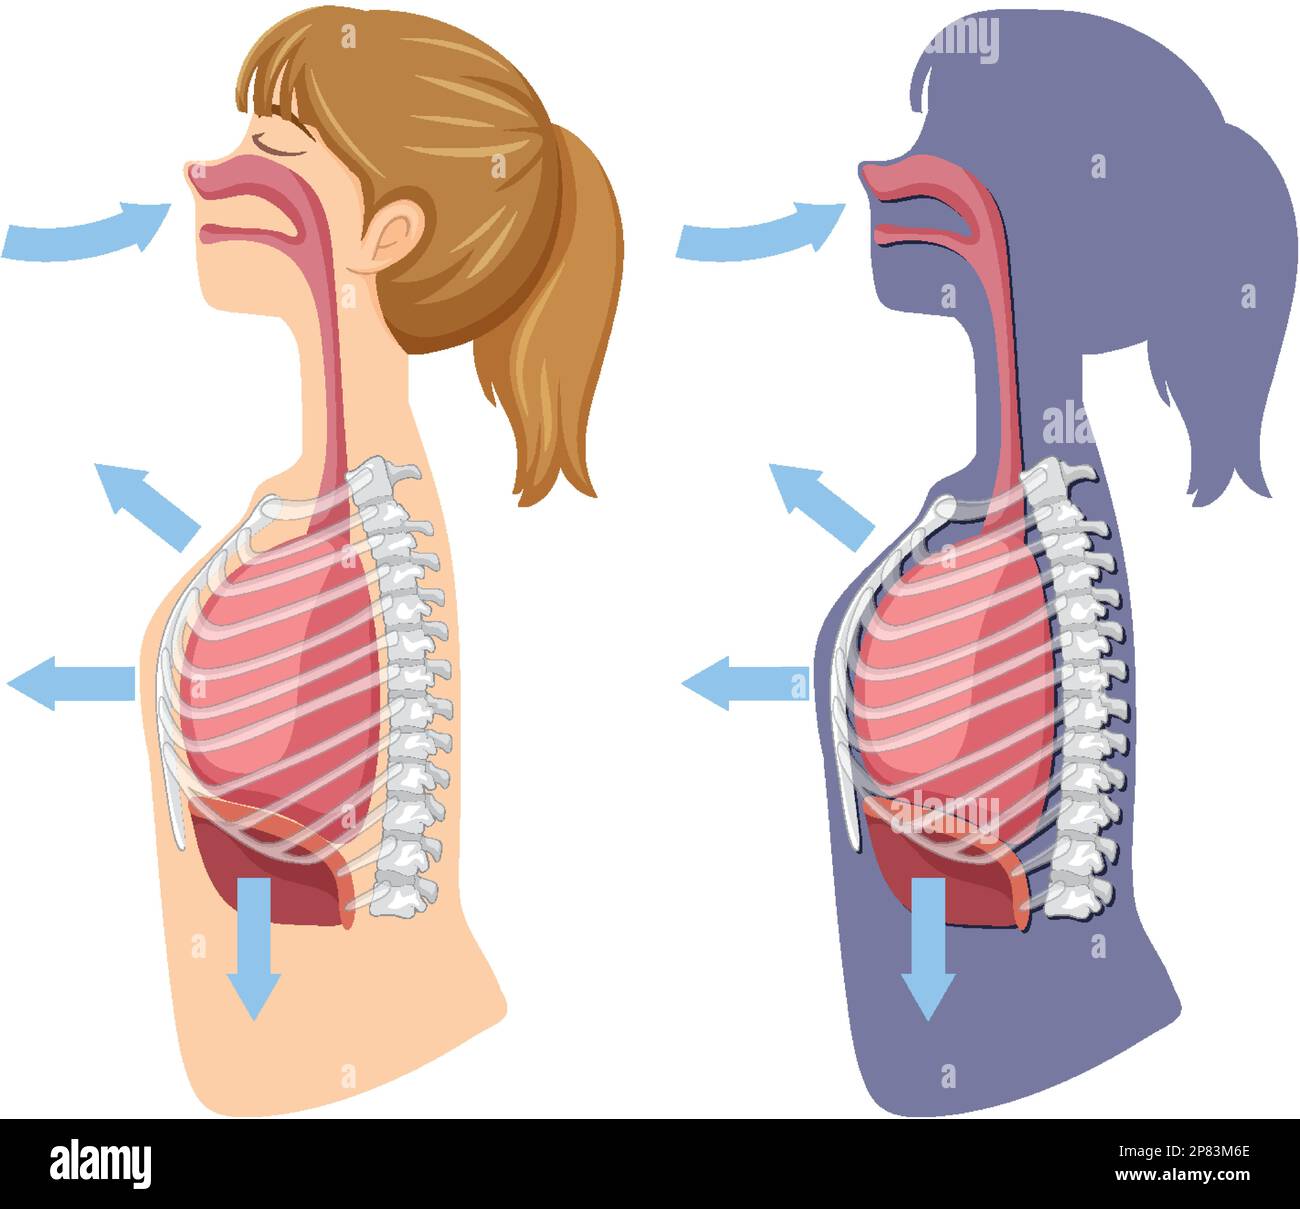 Breathing Mechanism: Inhalation and Exhalation 